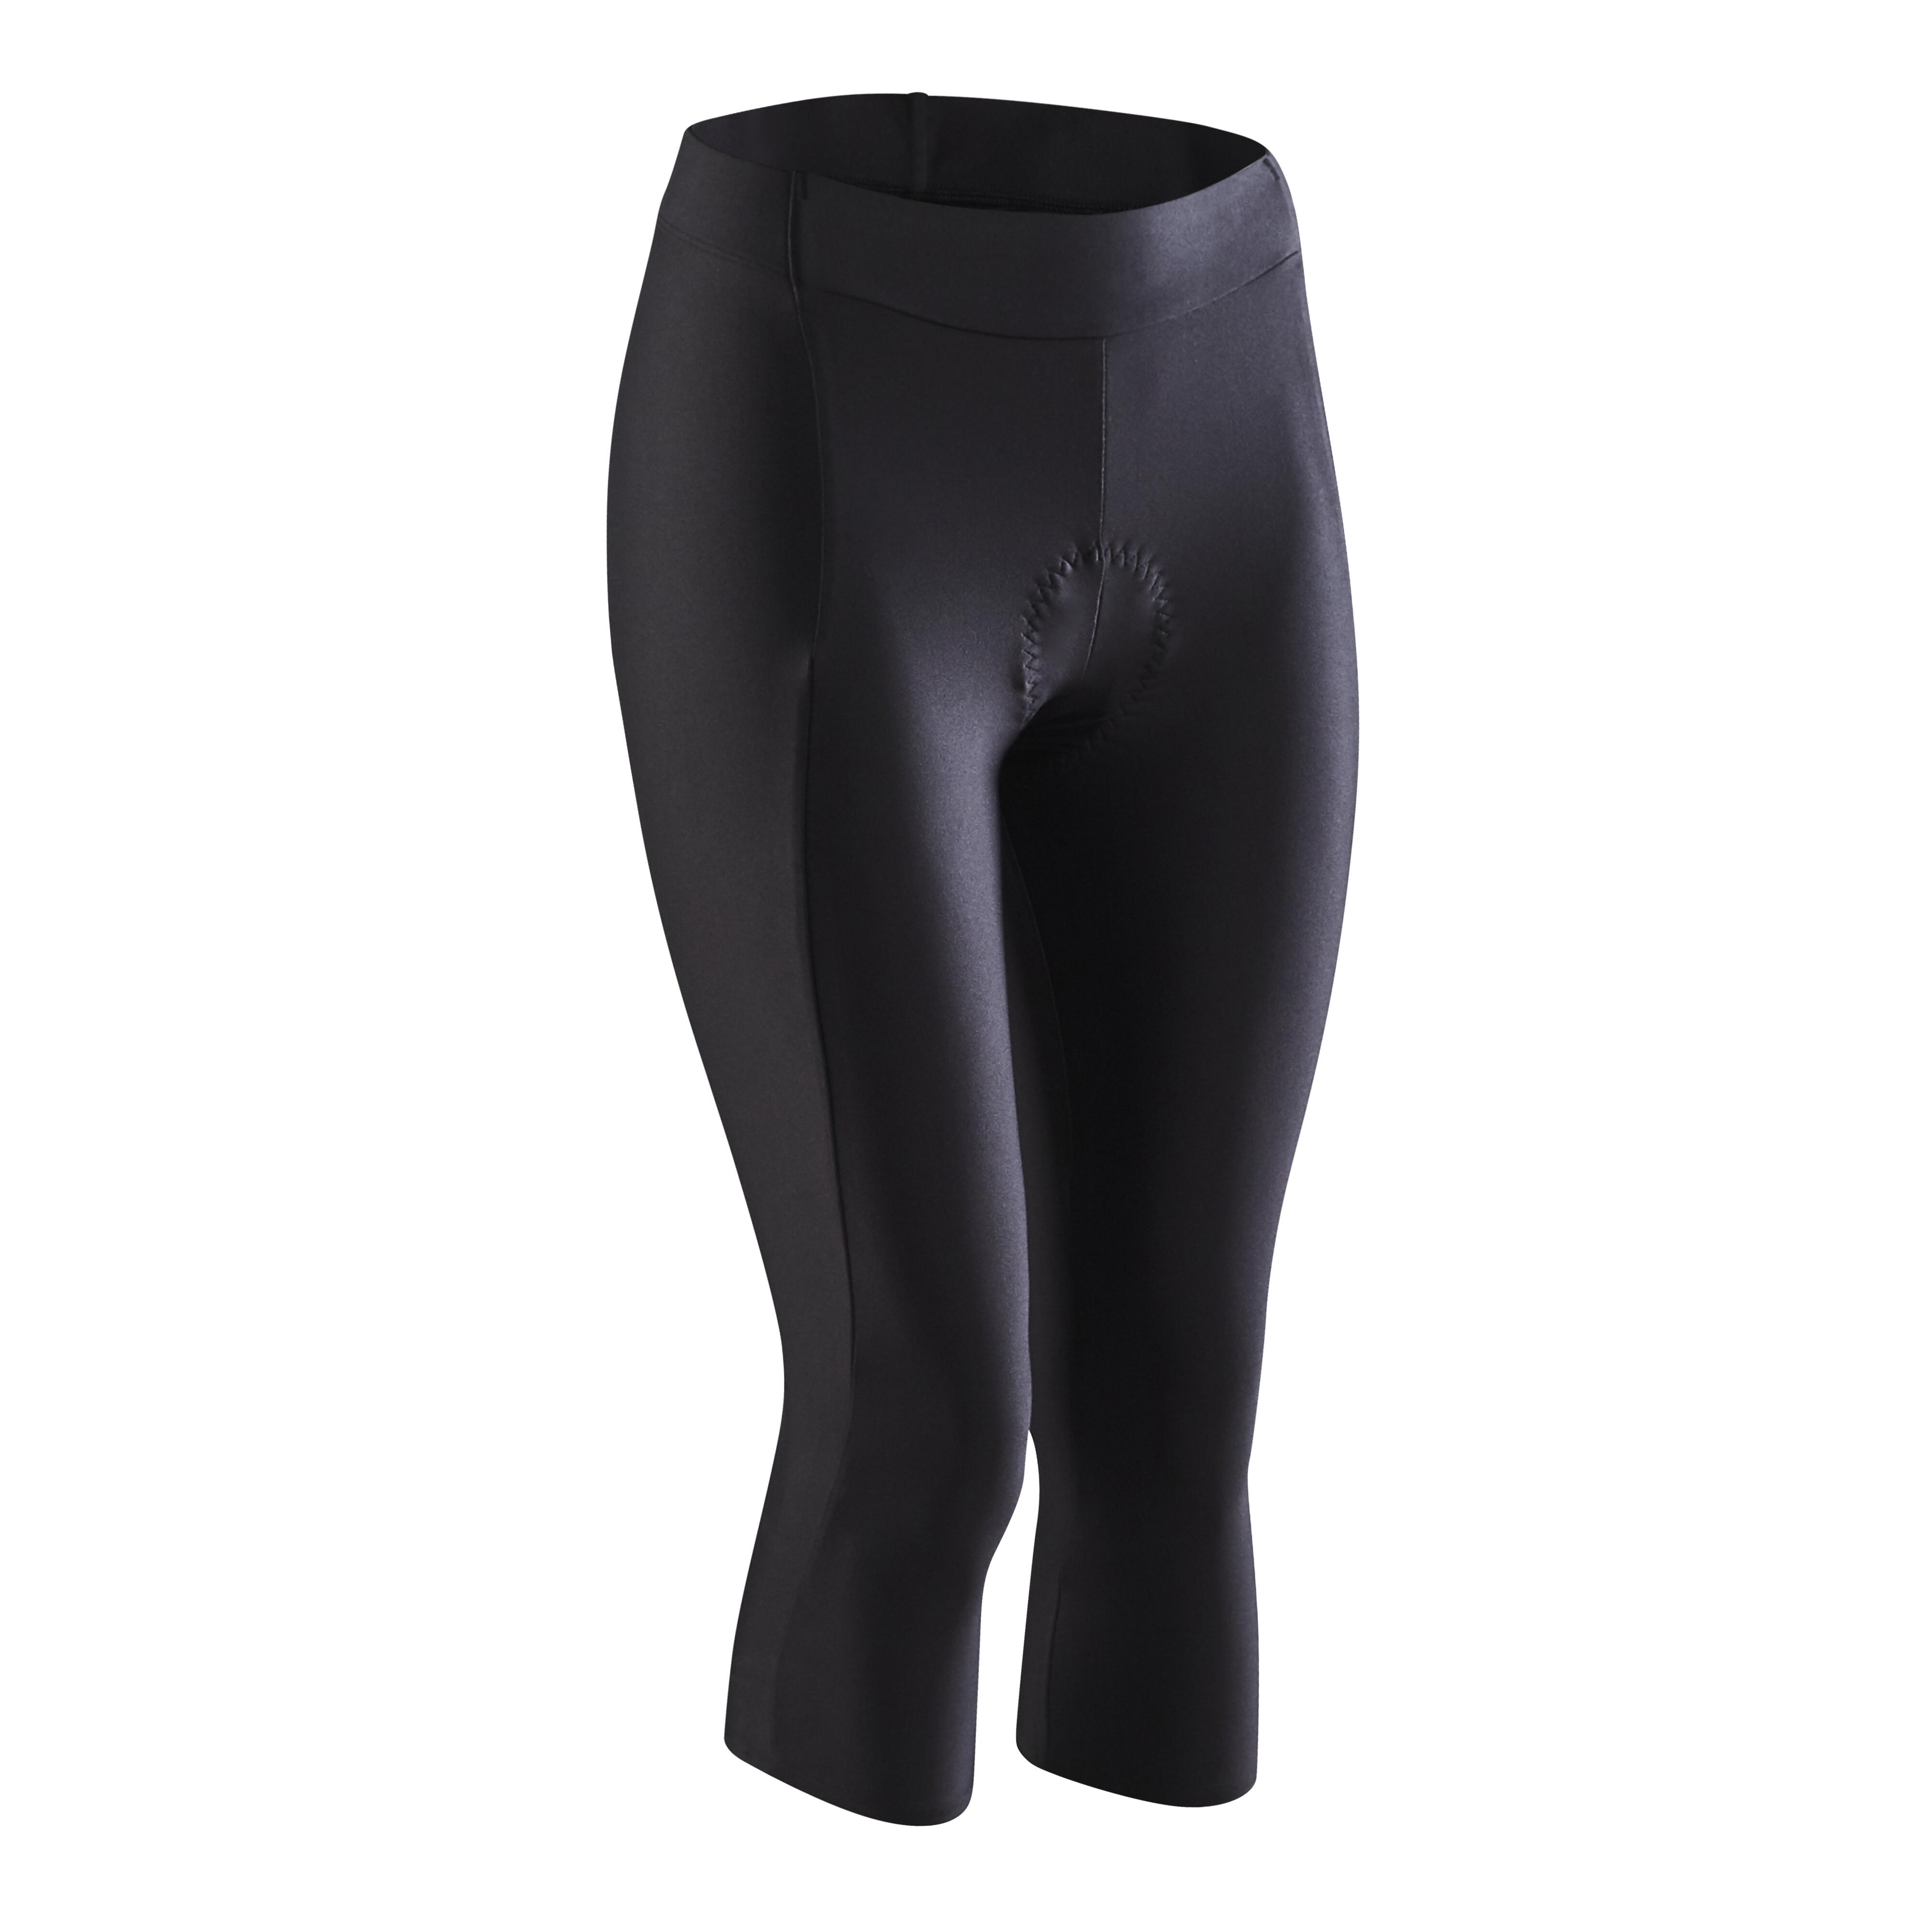 New Heavies Women Cycling Clothing 3/4 Leg Trousers Running